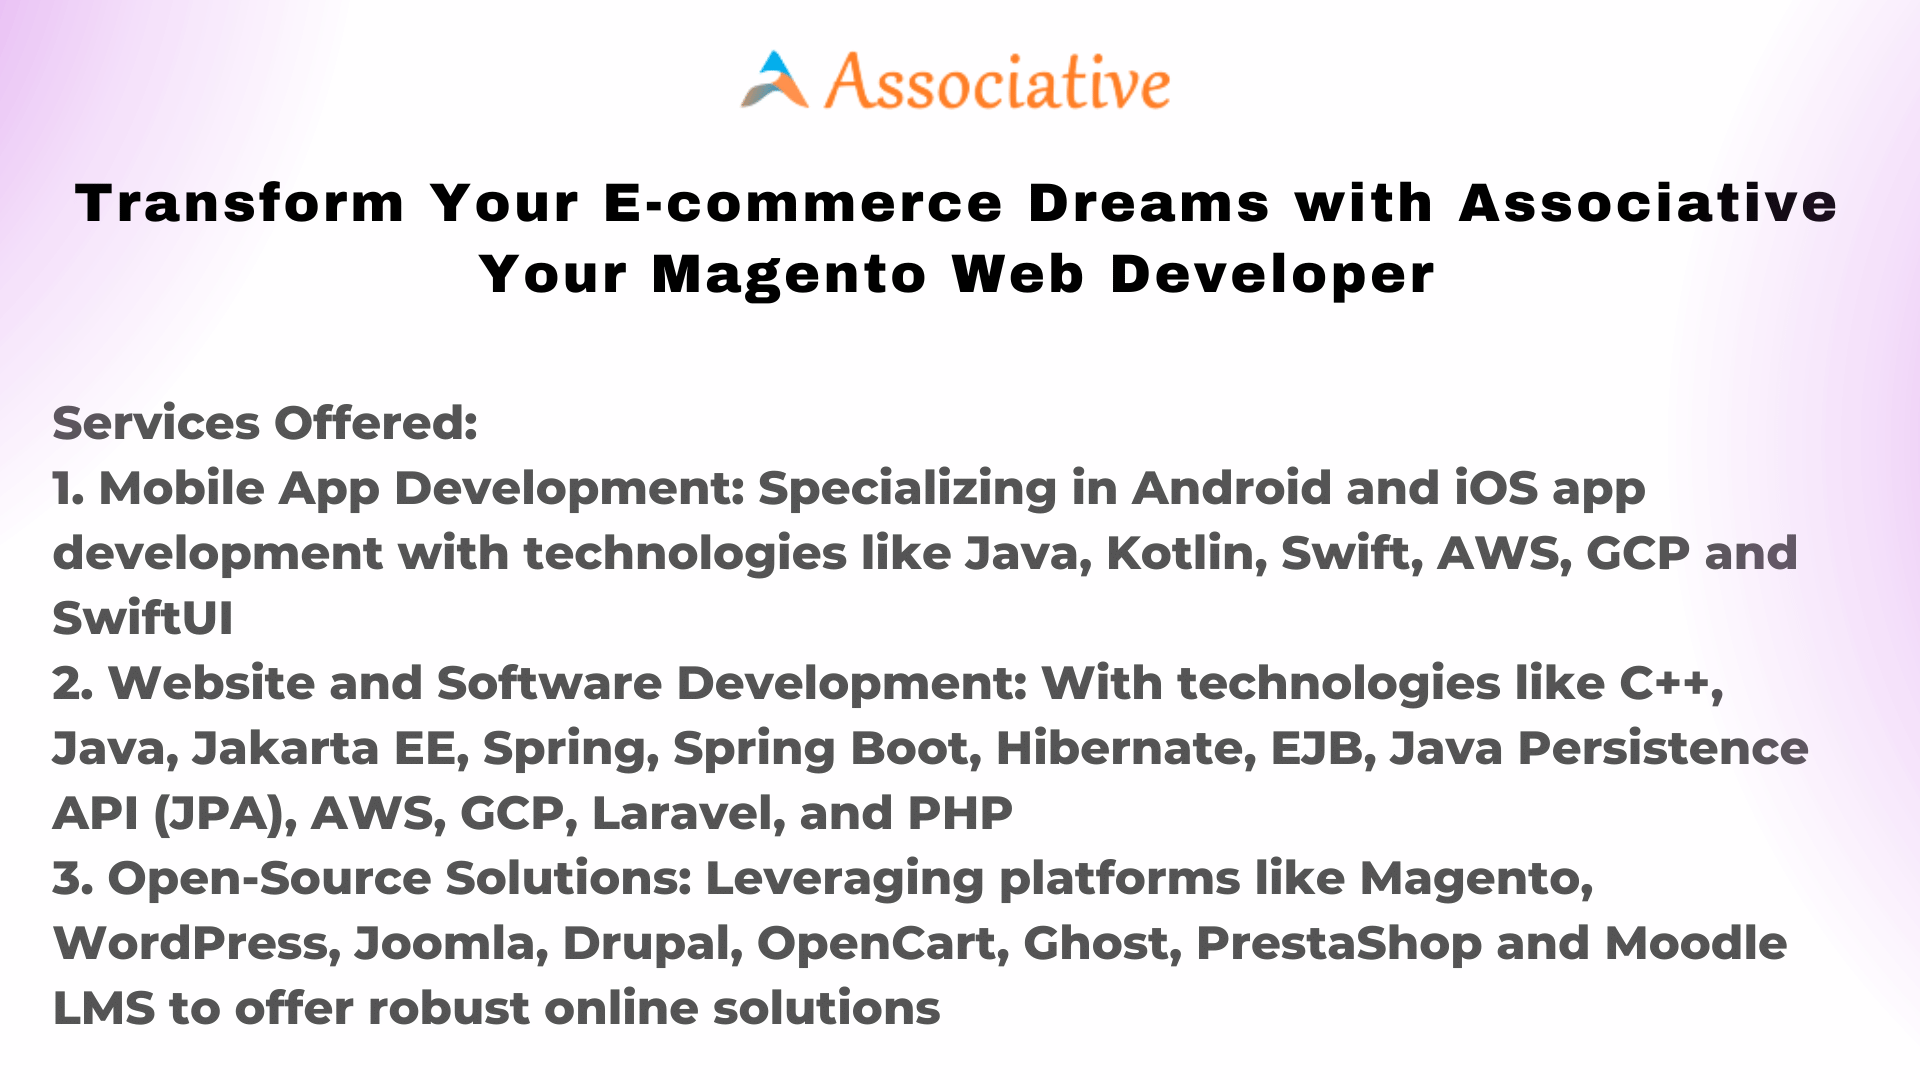 Transform Your E-commerce Dreams with Associative Your Magento Web Developer